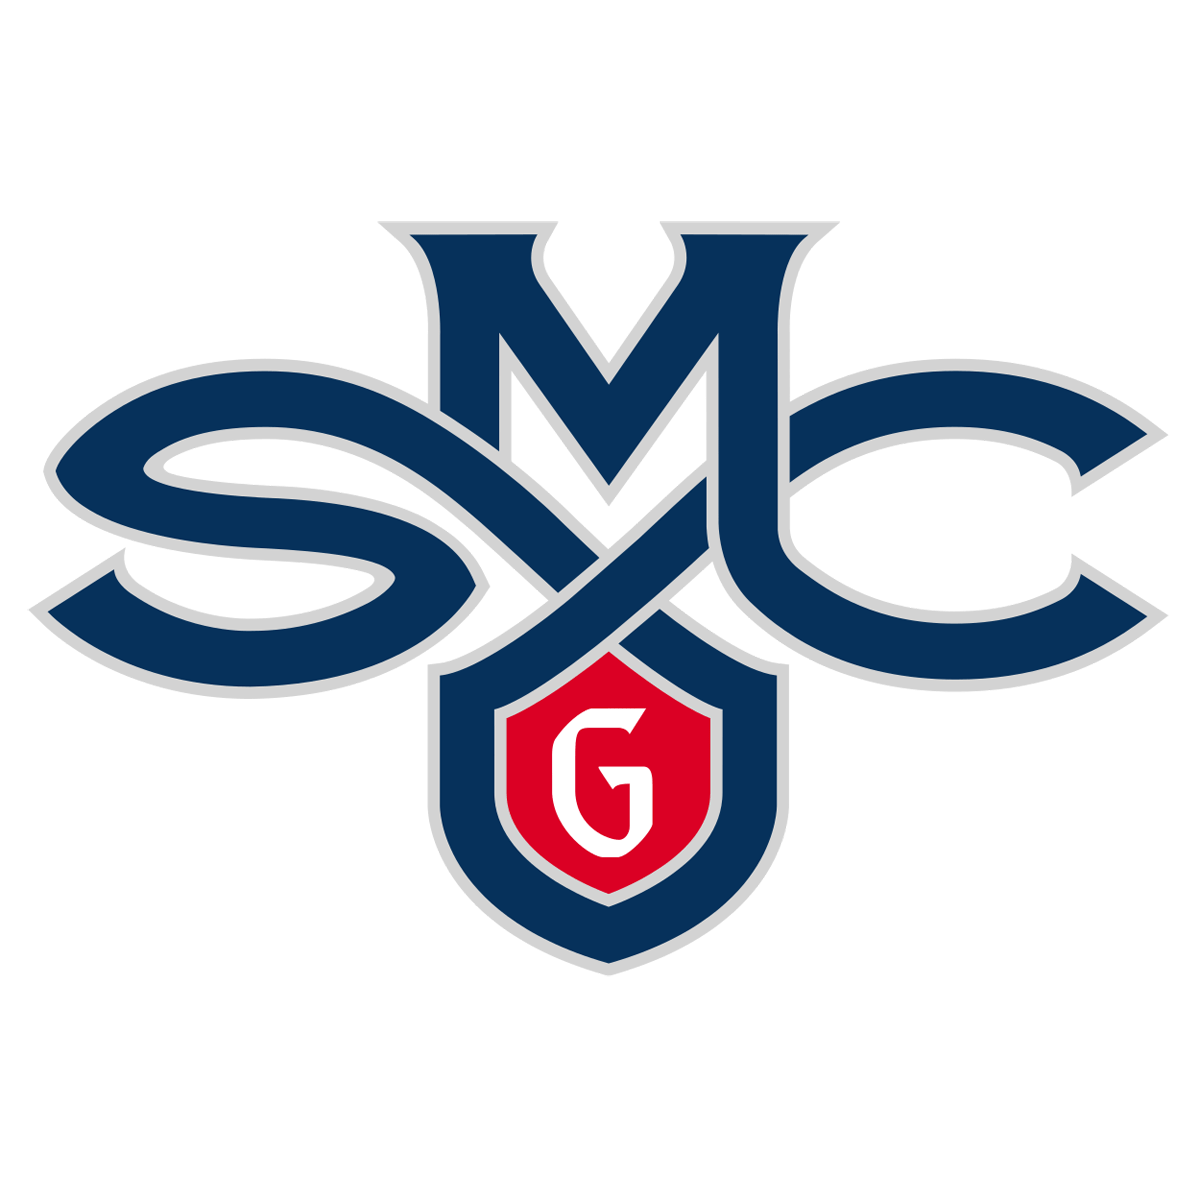 Saint Mary's College Gaels logo